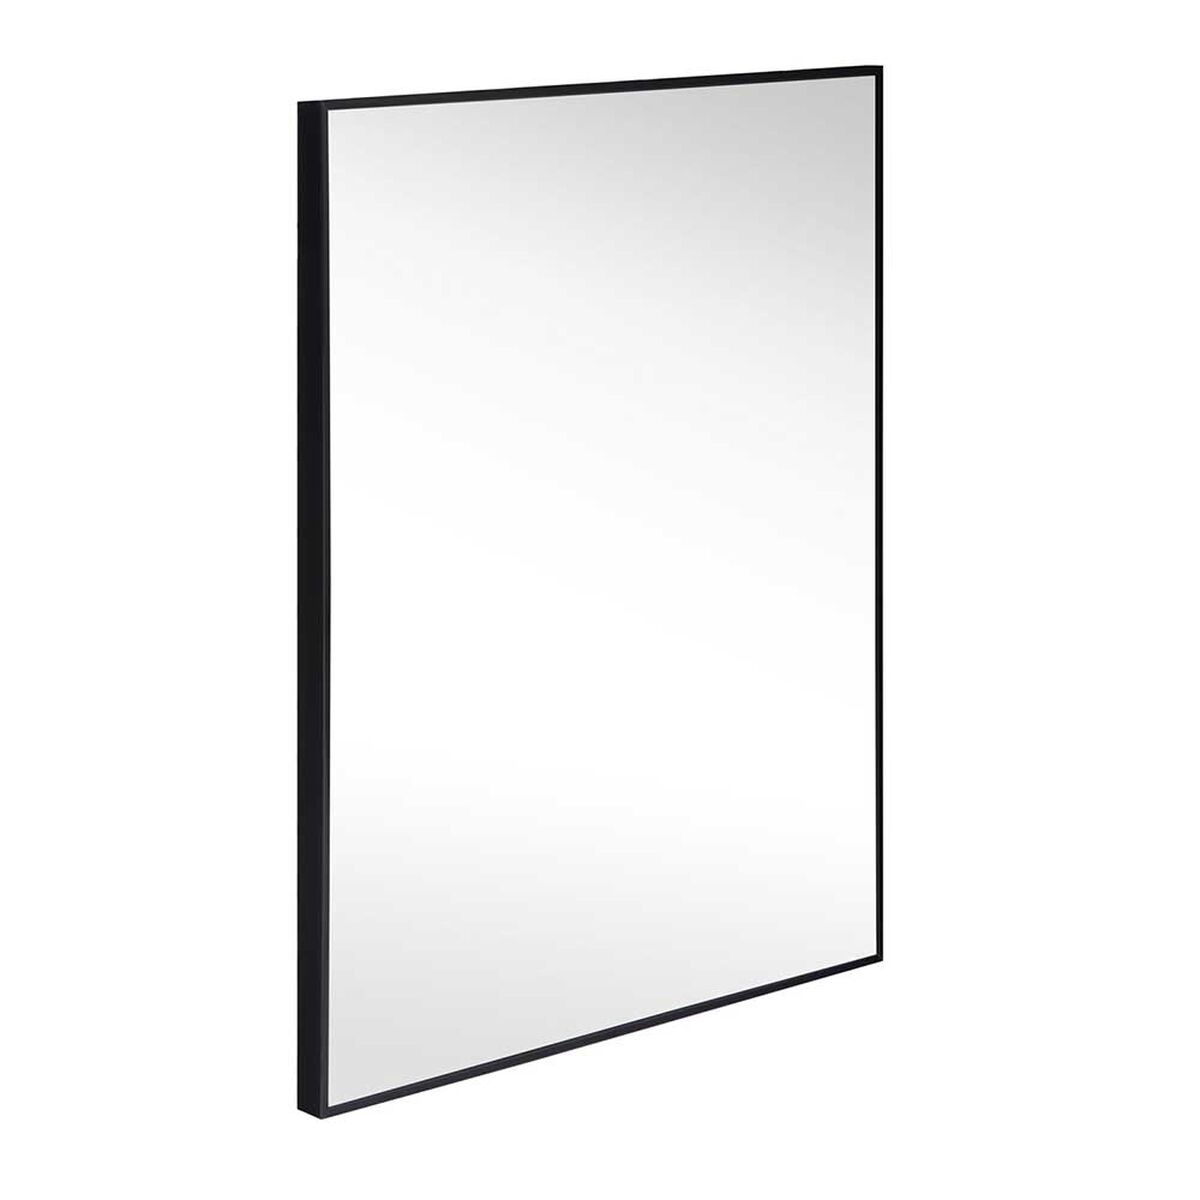 Espejo Marco Aluminio Vgo para Colgar Rectangular 60 x 50 cm Negro